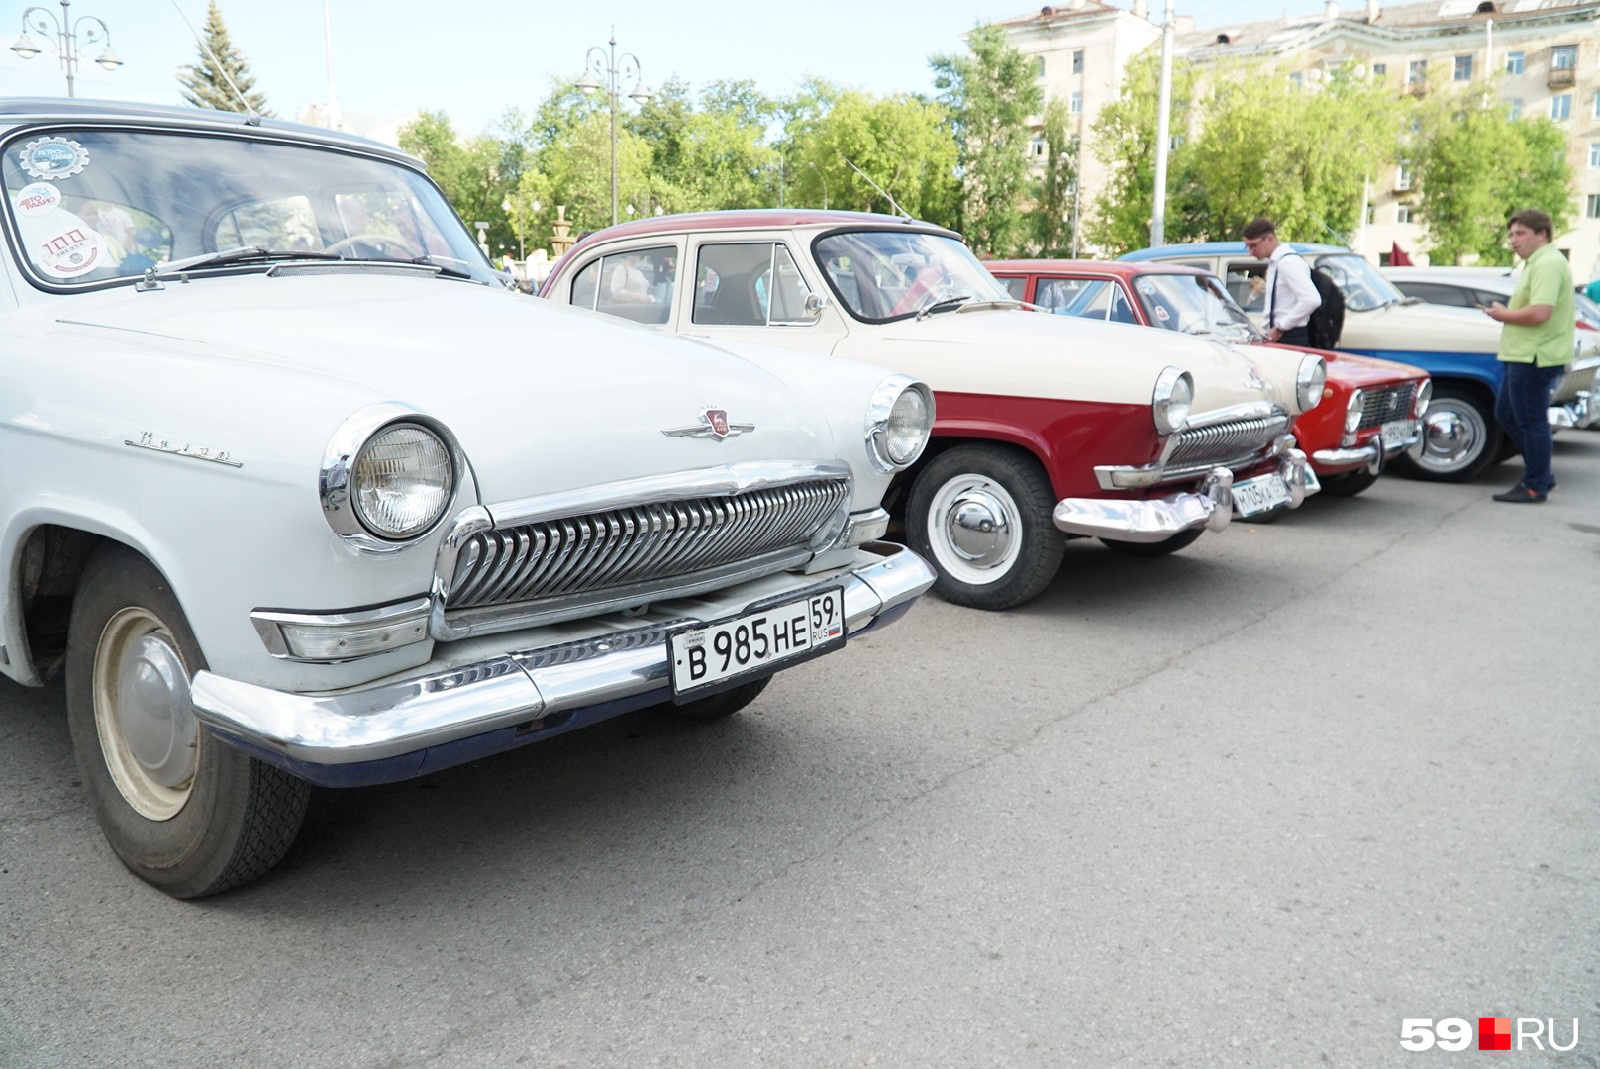 Машины — экспонаты музея «Ретро-Гараж»